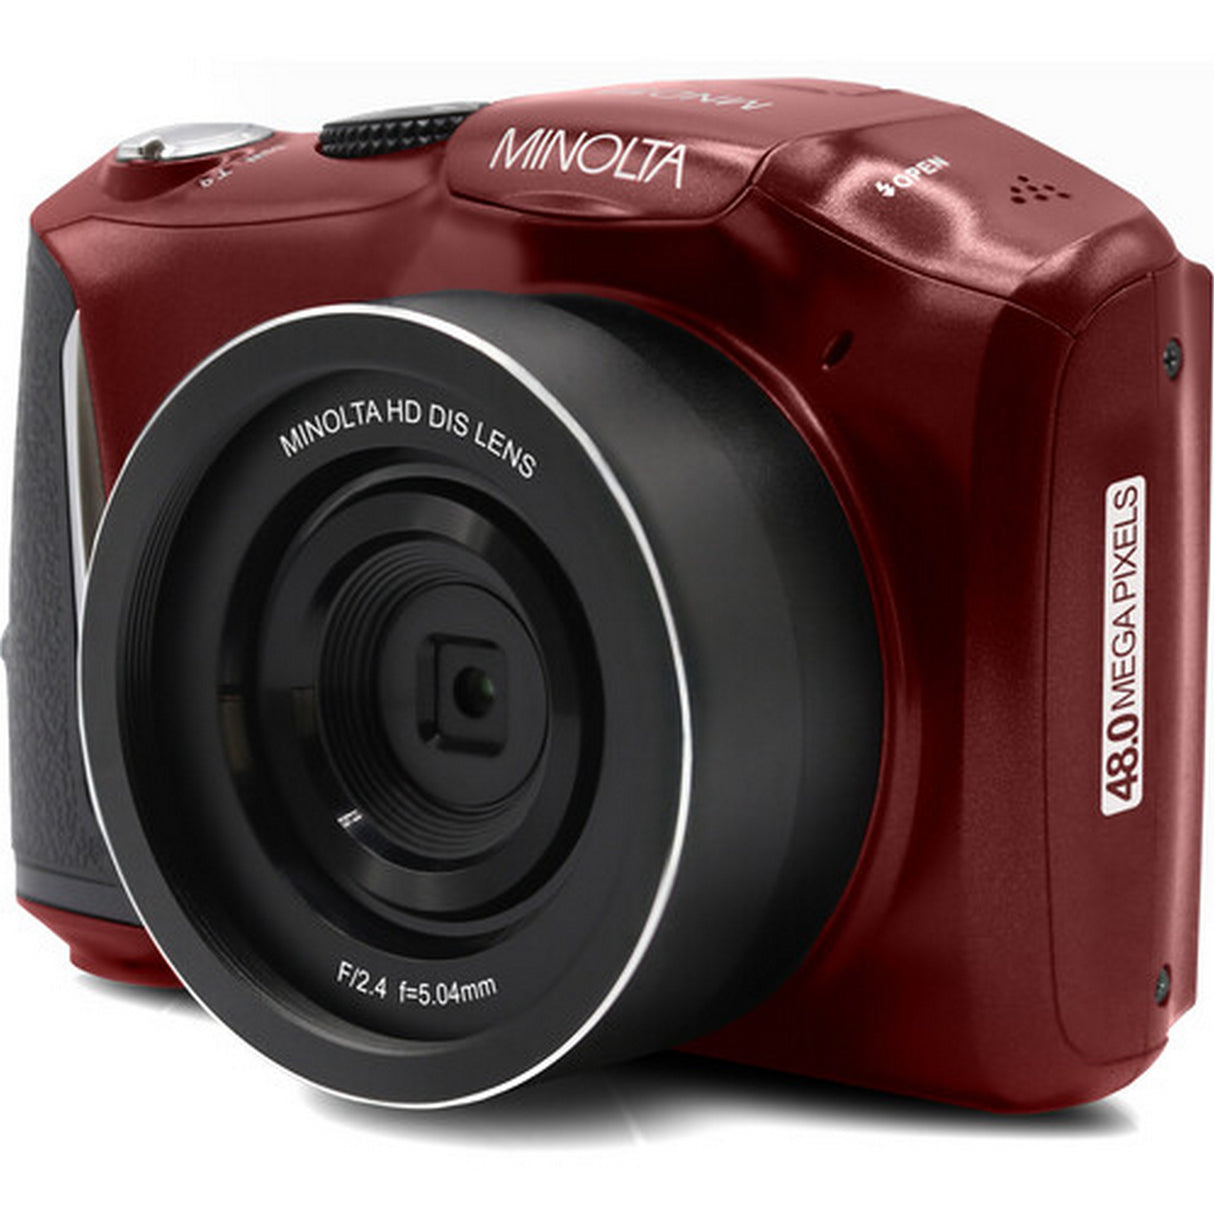 Minolta MND50 48 MP 4K Ultra HD Digital Camera, Red